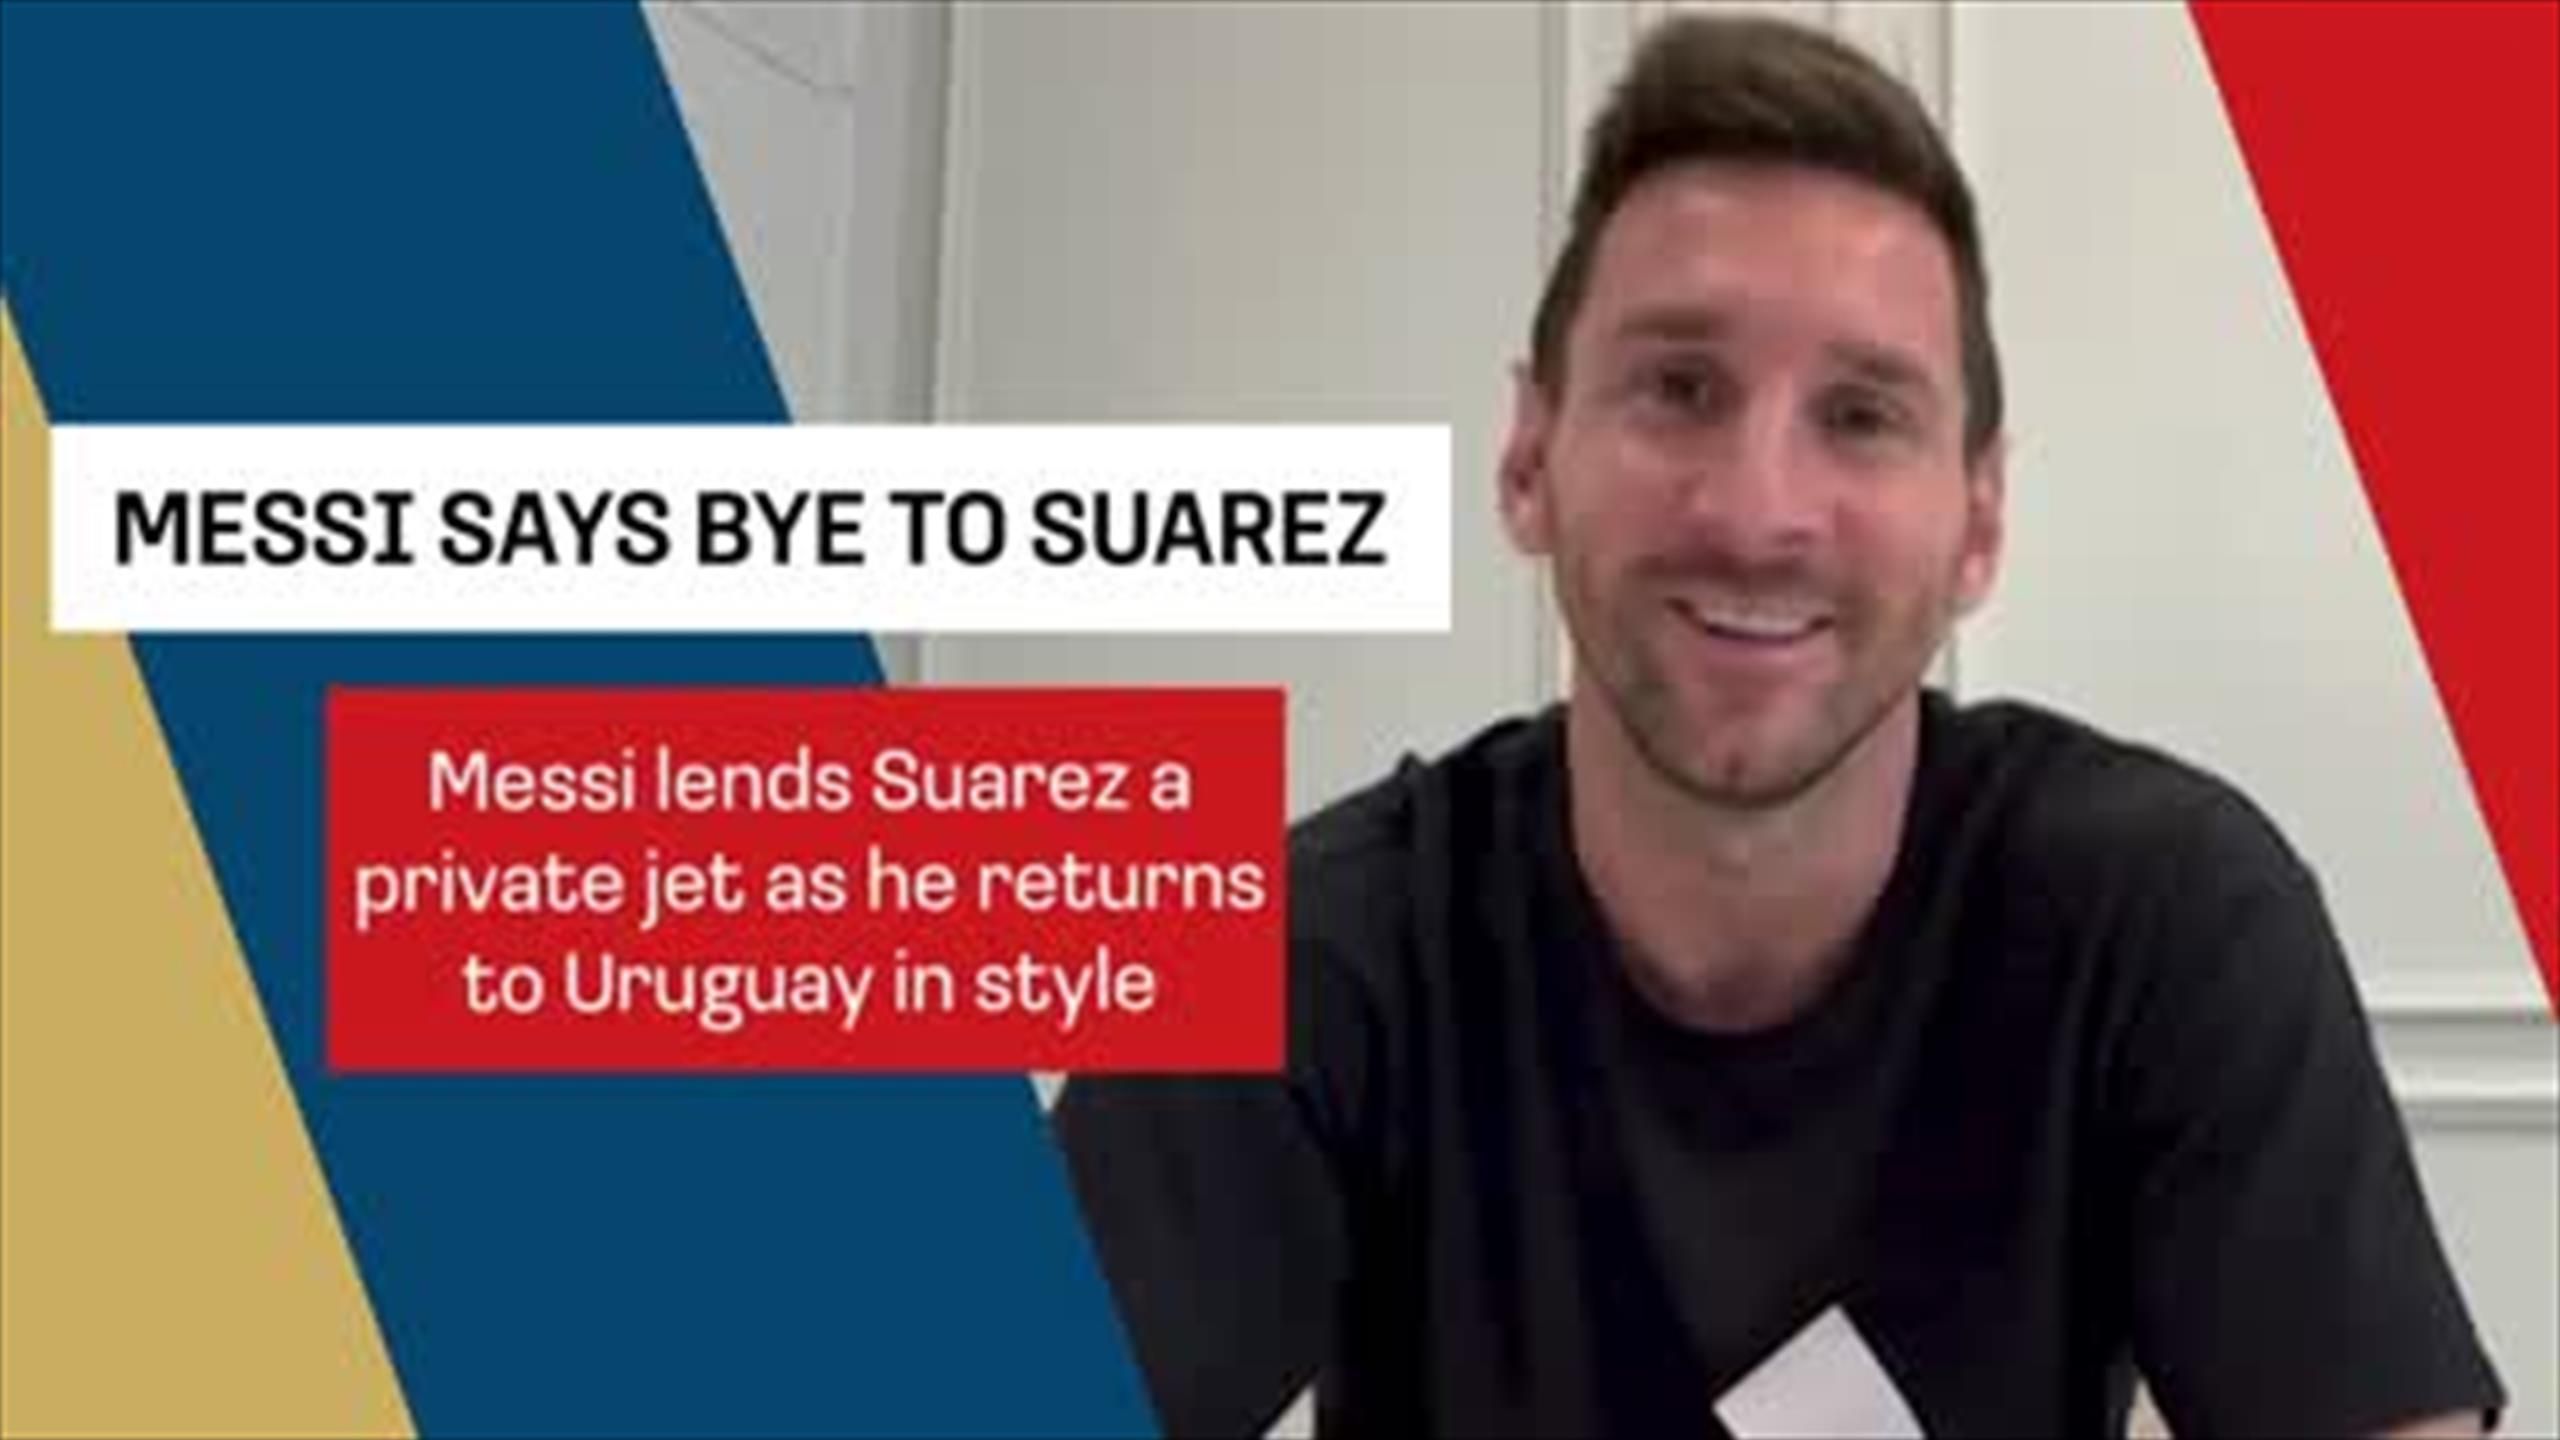 Lionel Μеѕѕі says goodbye to ex-Barcelona team-mate Luis Suarez as  ex-Liverpool forward returns to Uruguay - Football video - Eurosport